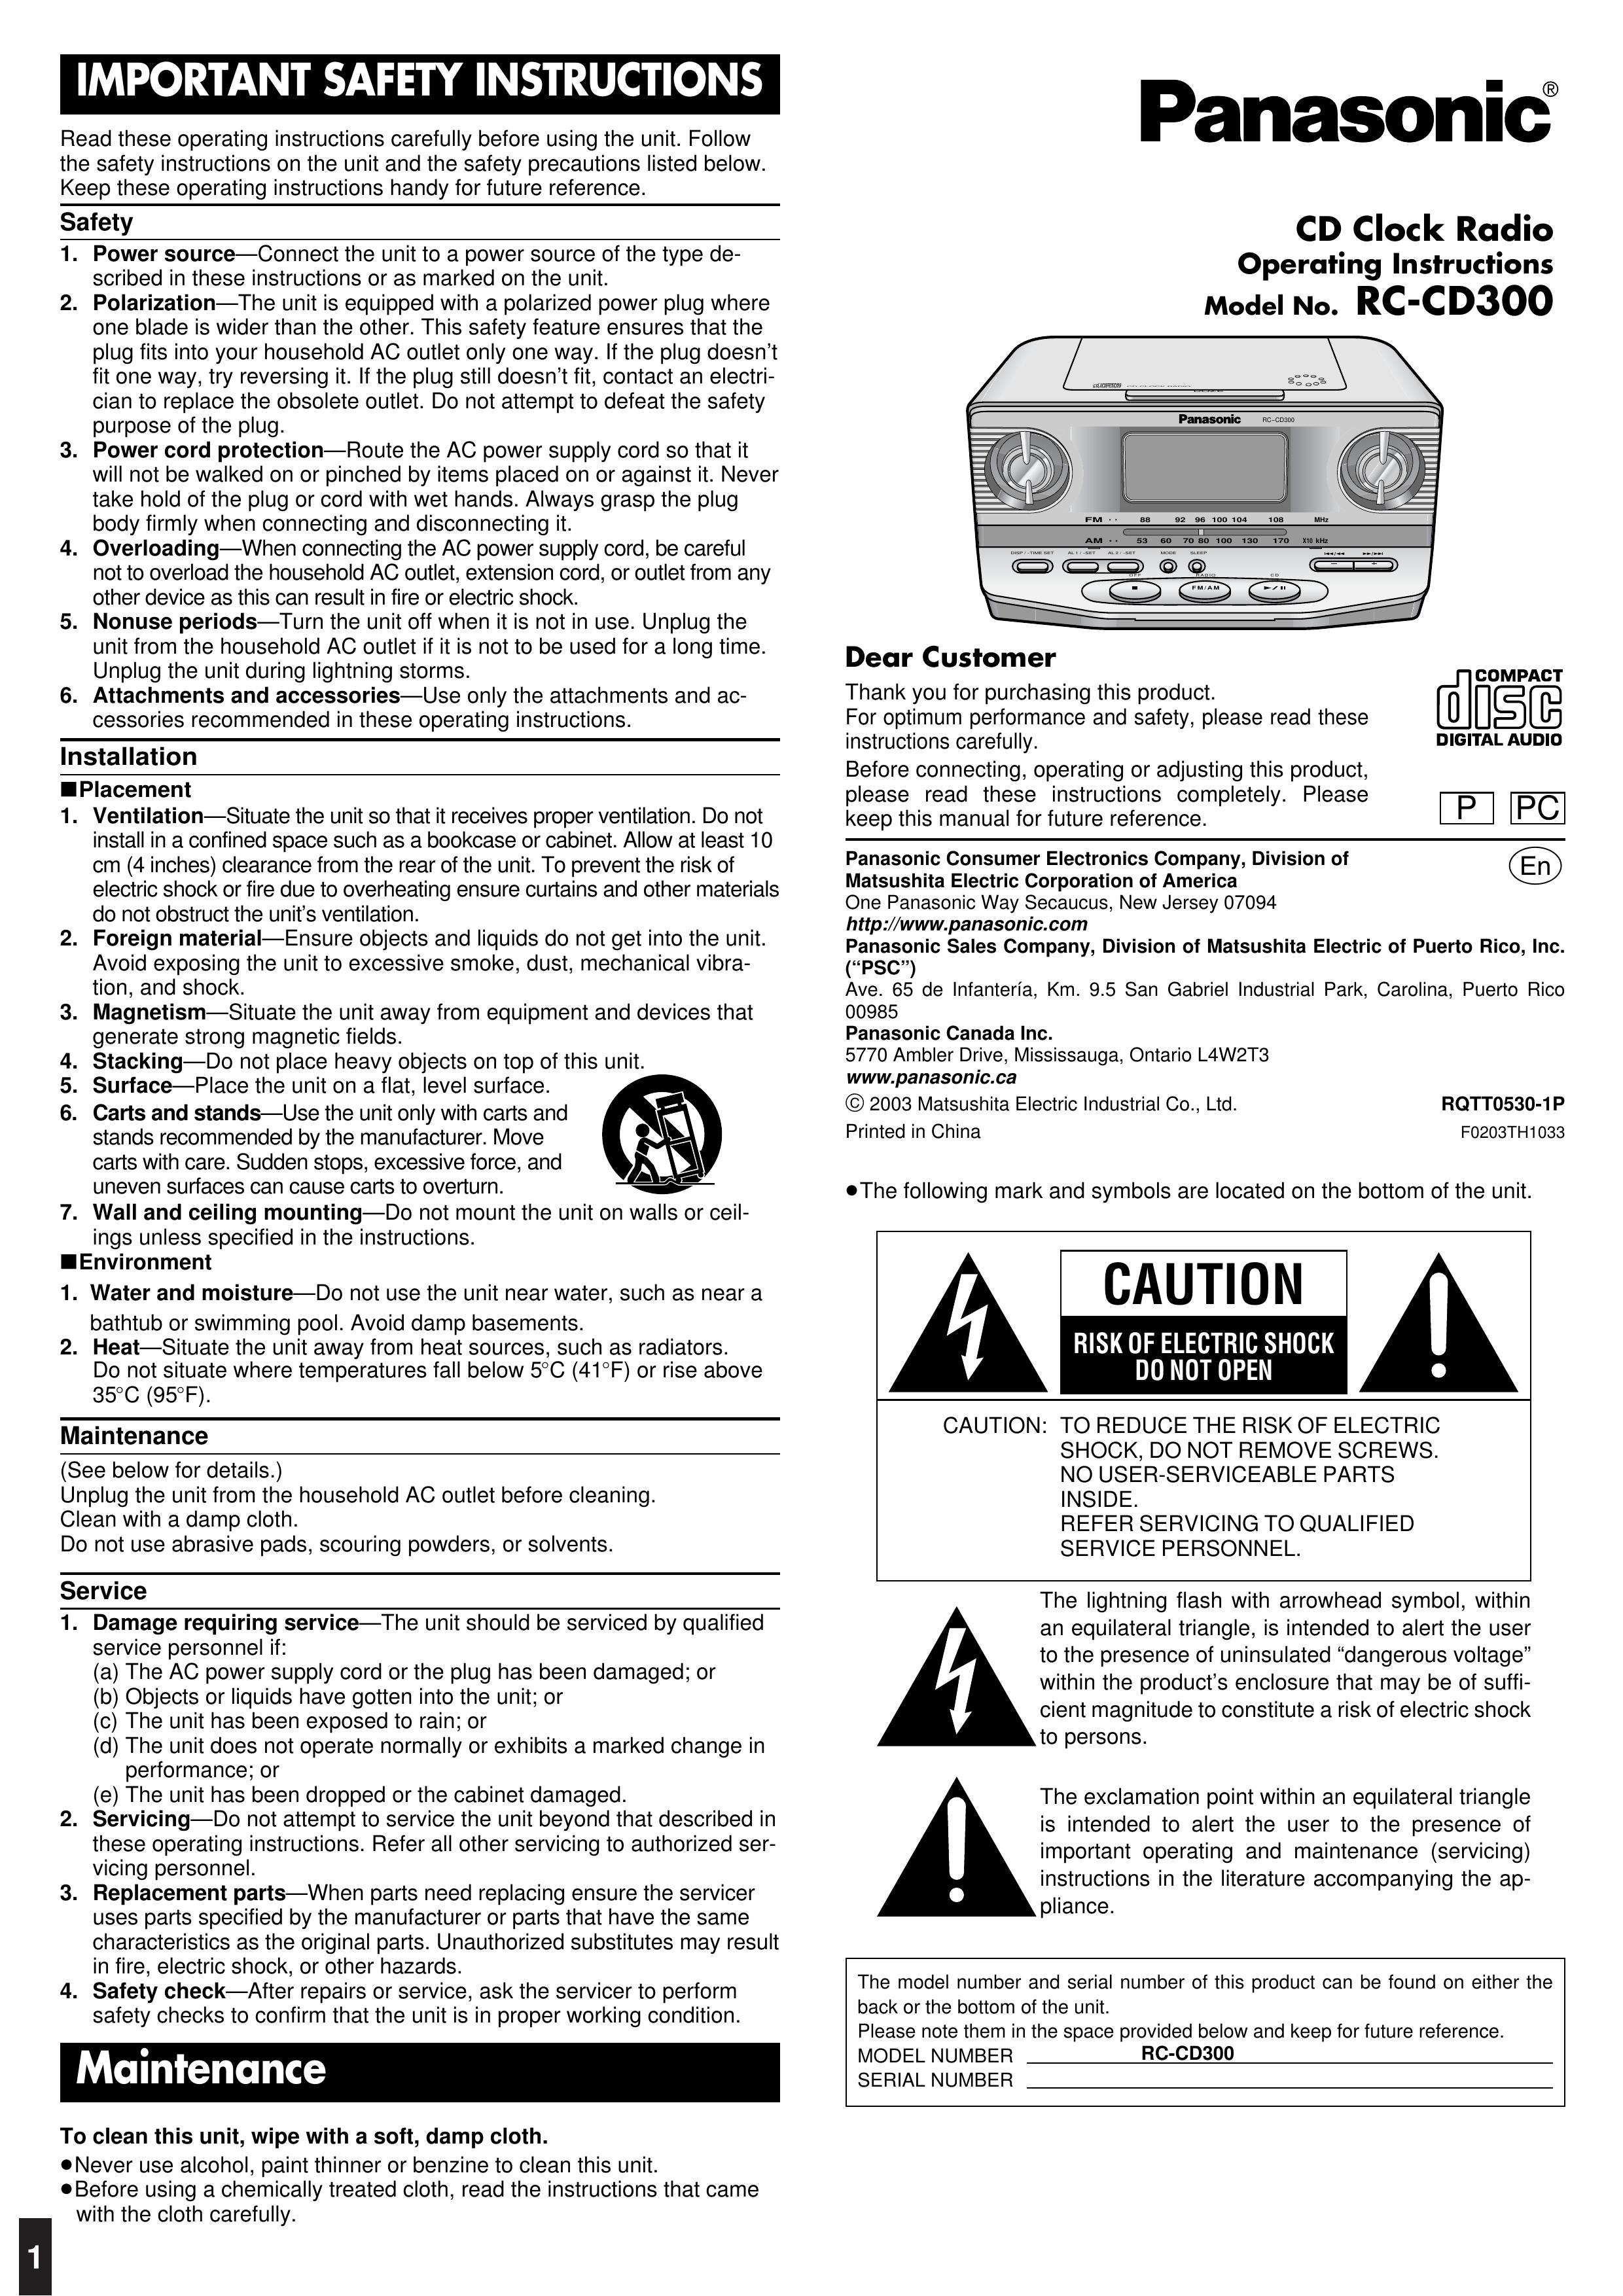 Panasonic RC-CD300 Clock Radio User Manual